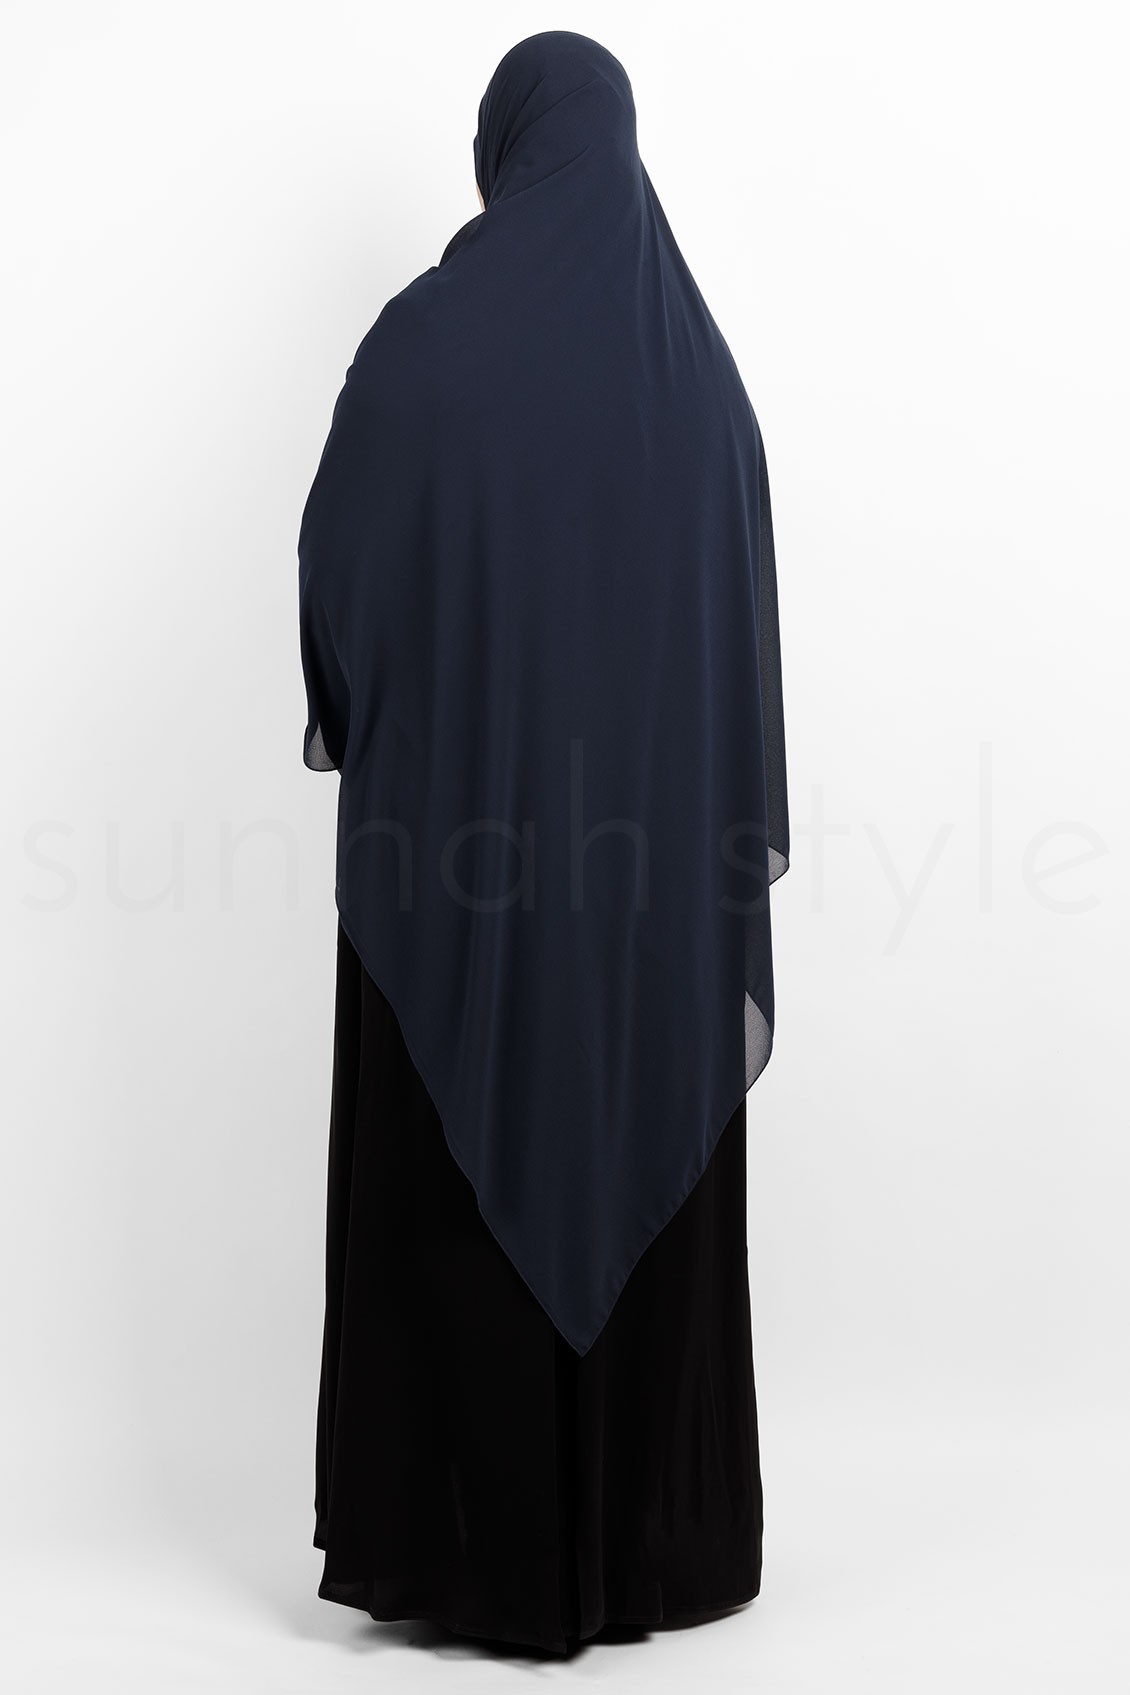 Sunnah Style Pebble Shayla XL Navy Blue